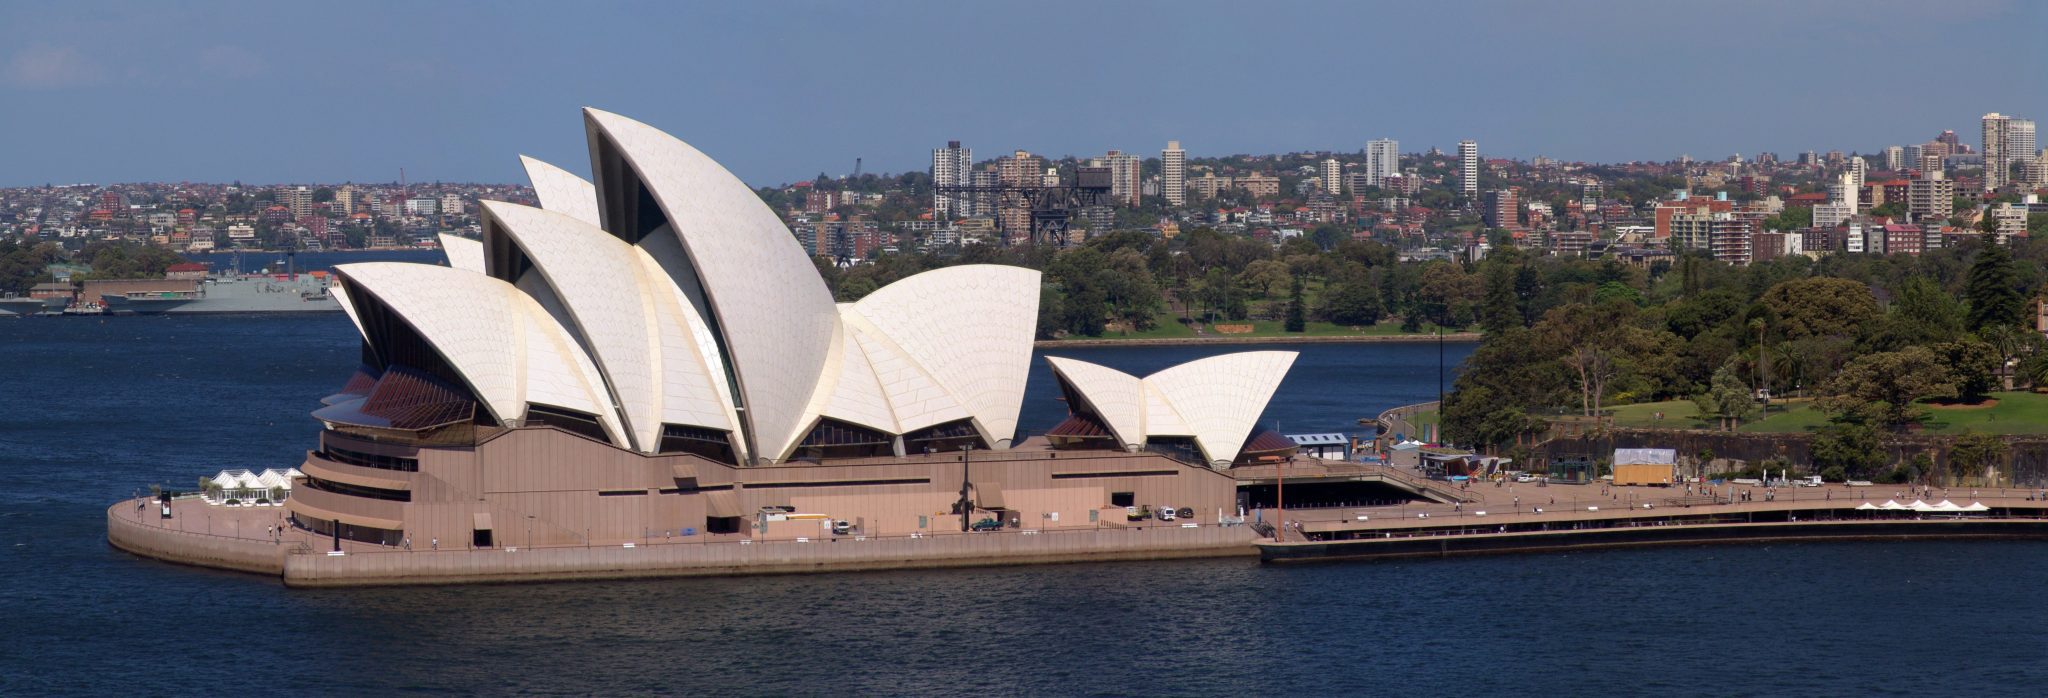 Sydney Opera House in Australia. Christian Mehlführer/Wikimedia Commons.